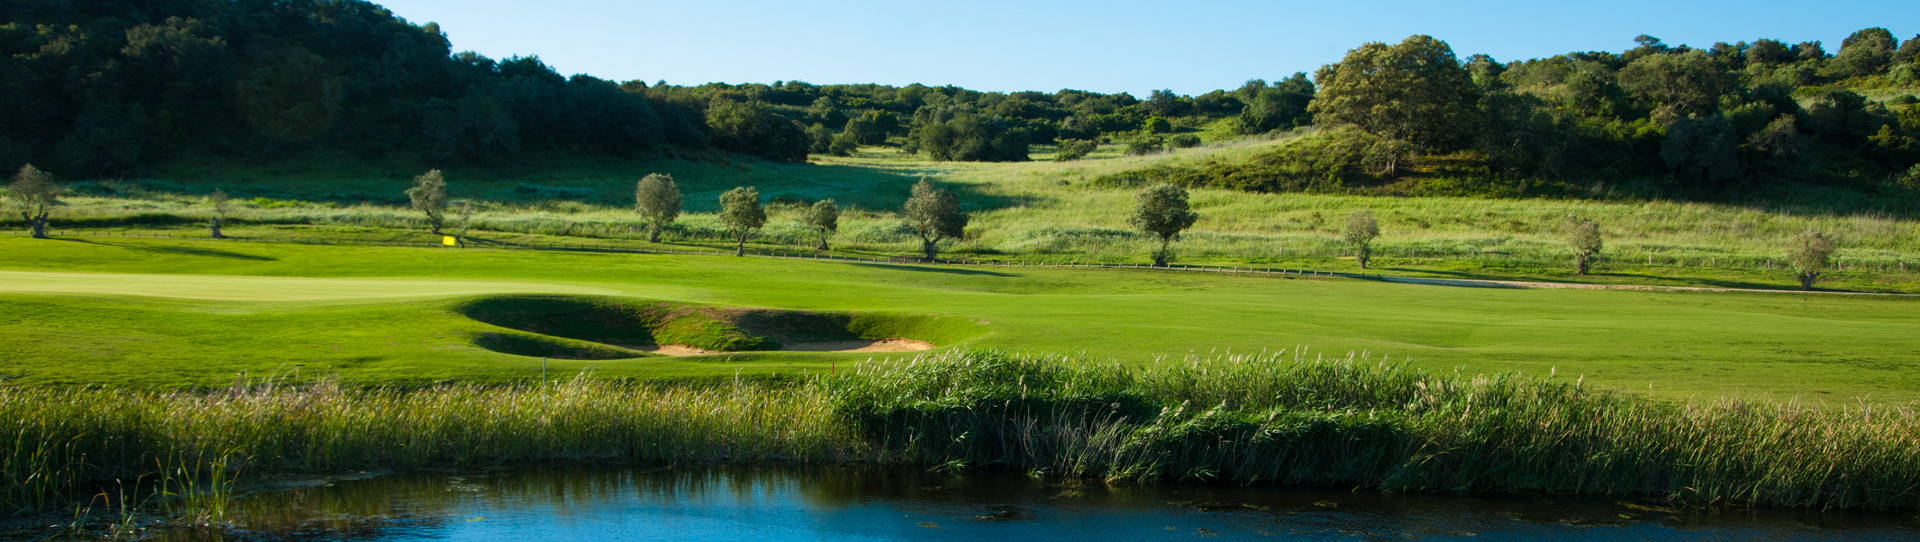 Portugal golf courses - Alamos Golf Course - Photo 3